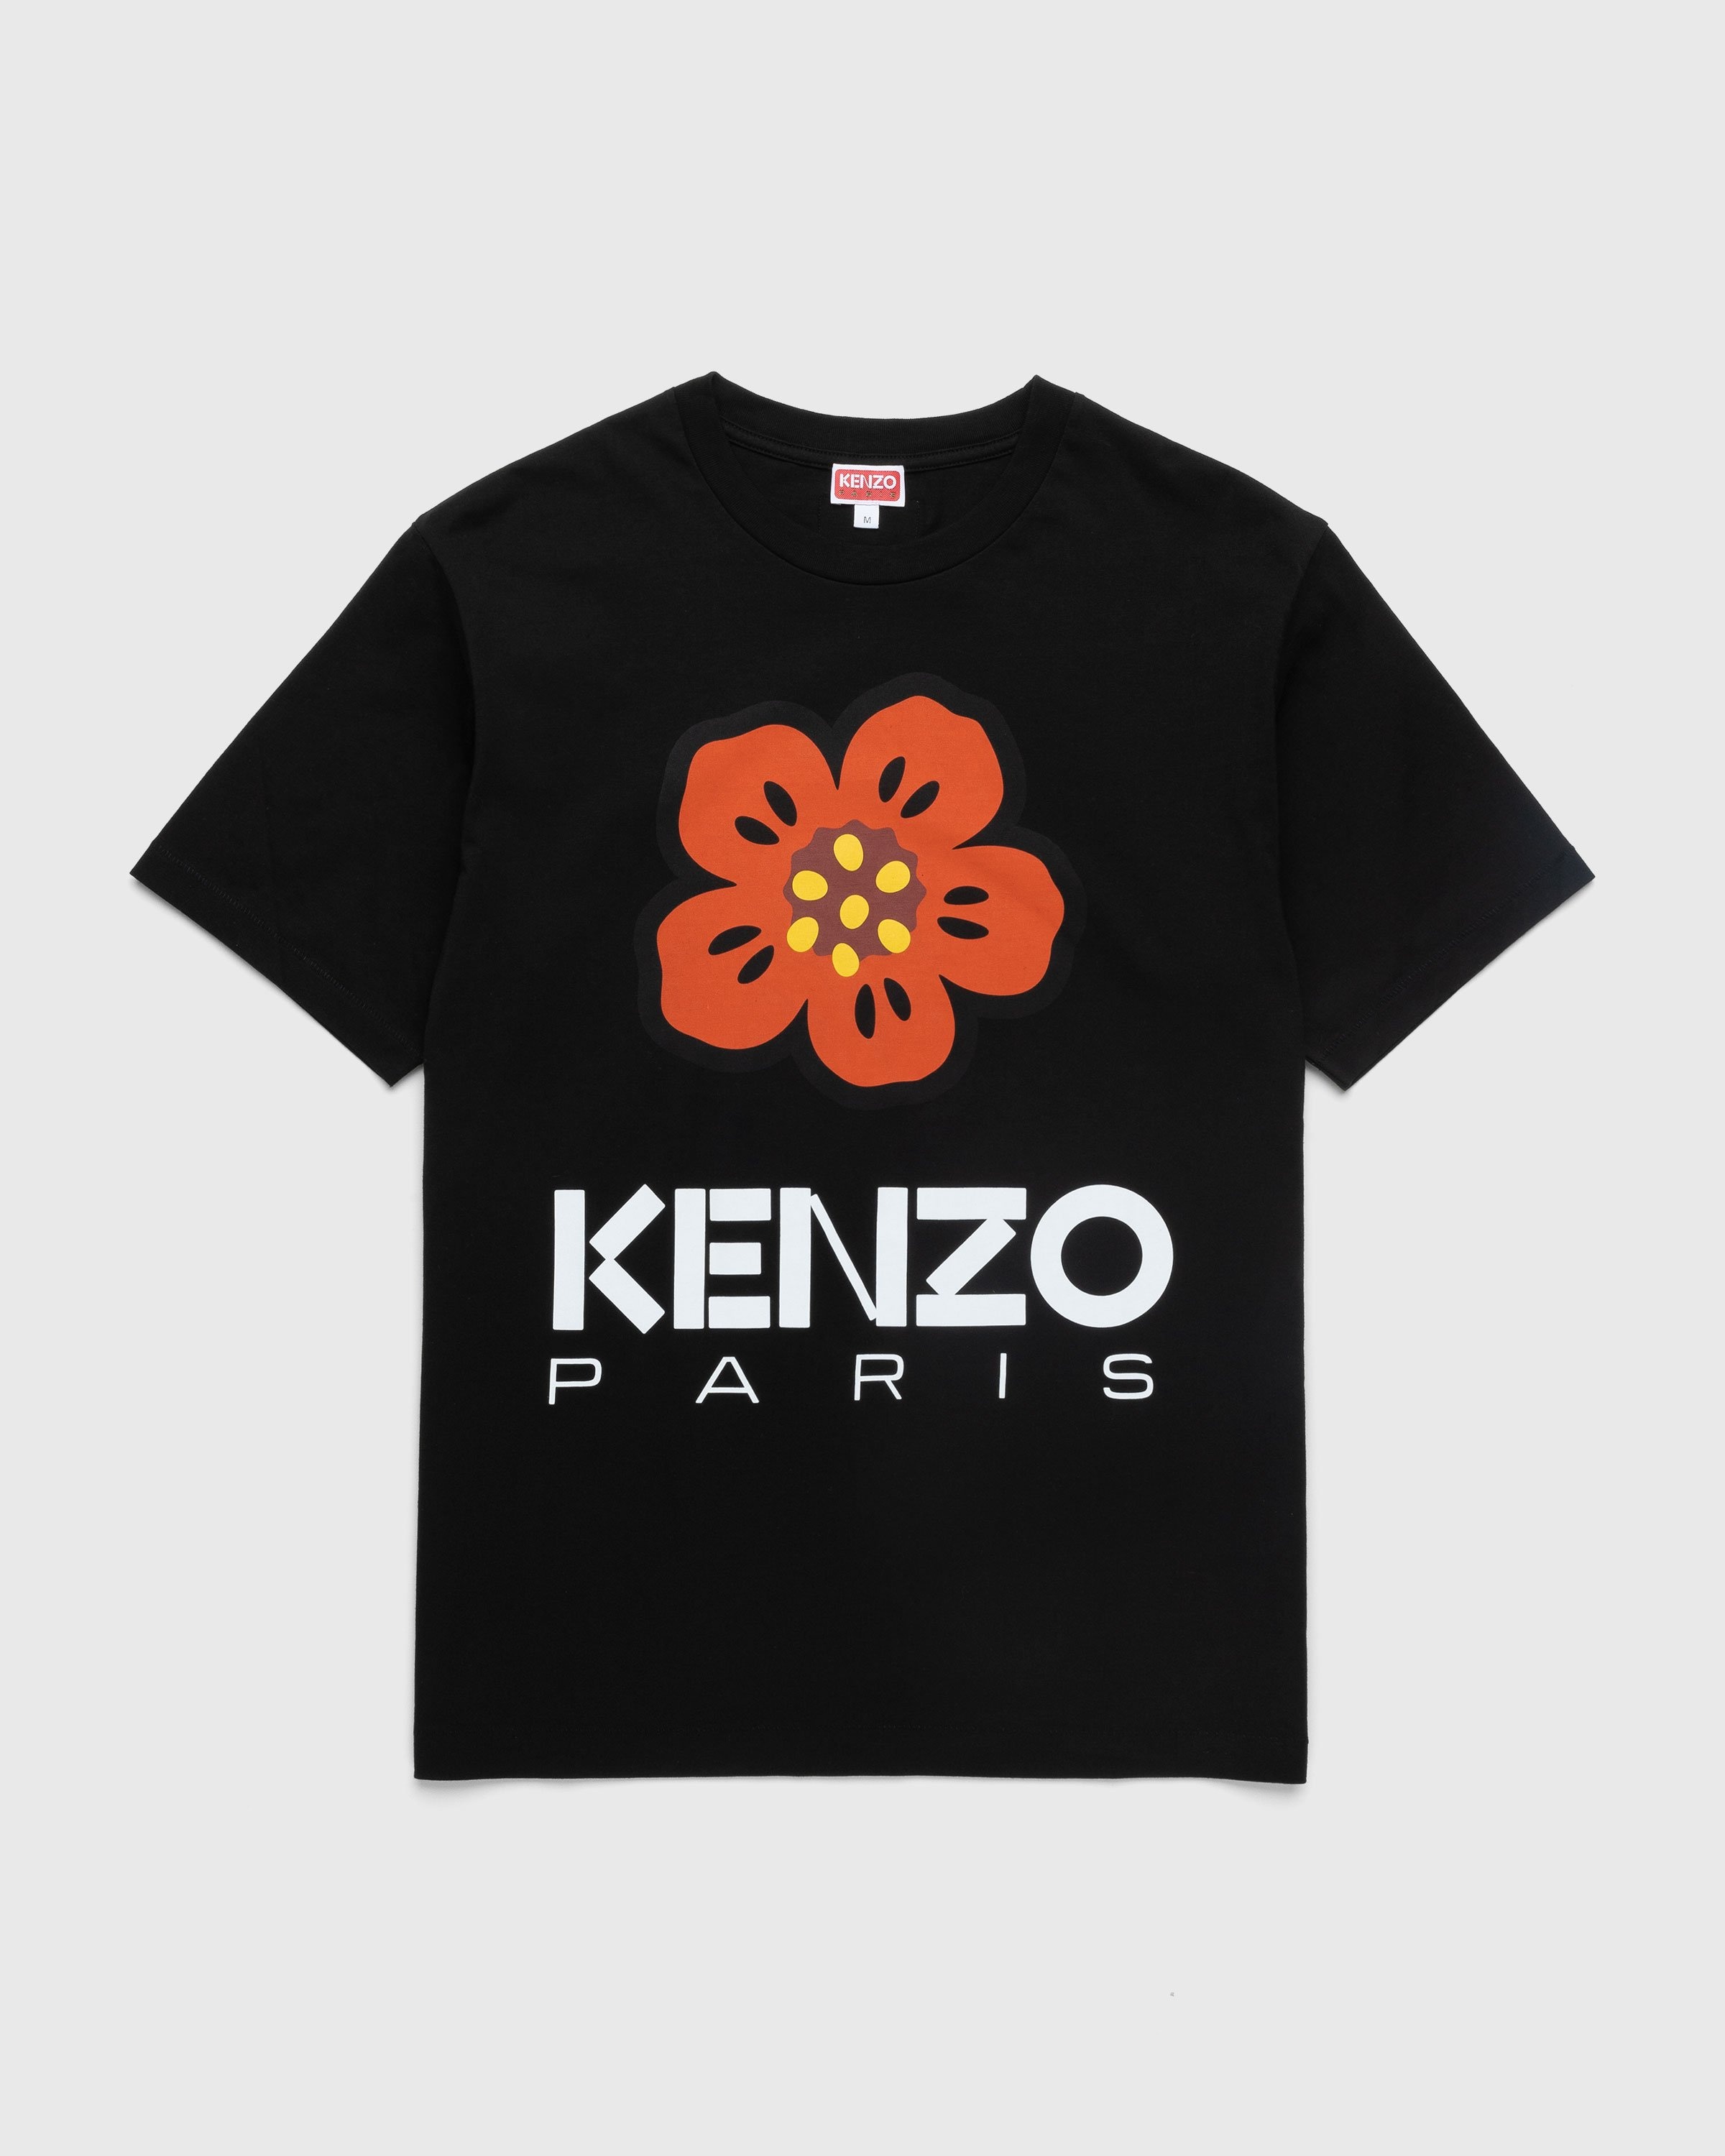 Nigo's Radically Straightforward Vision for Kenzo